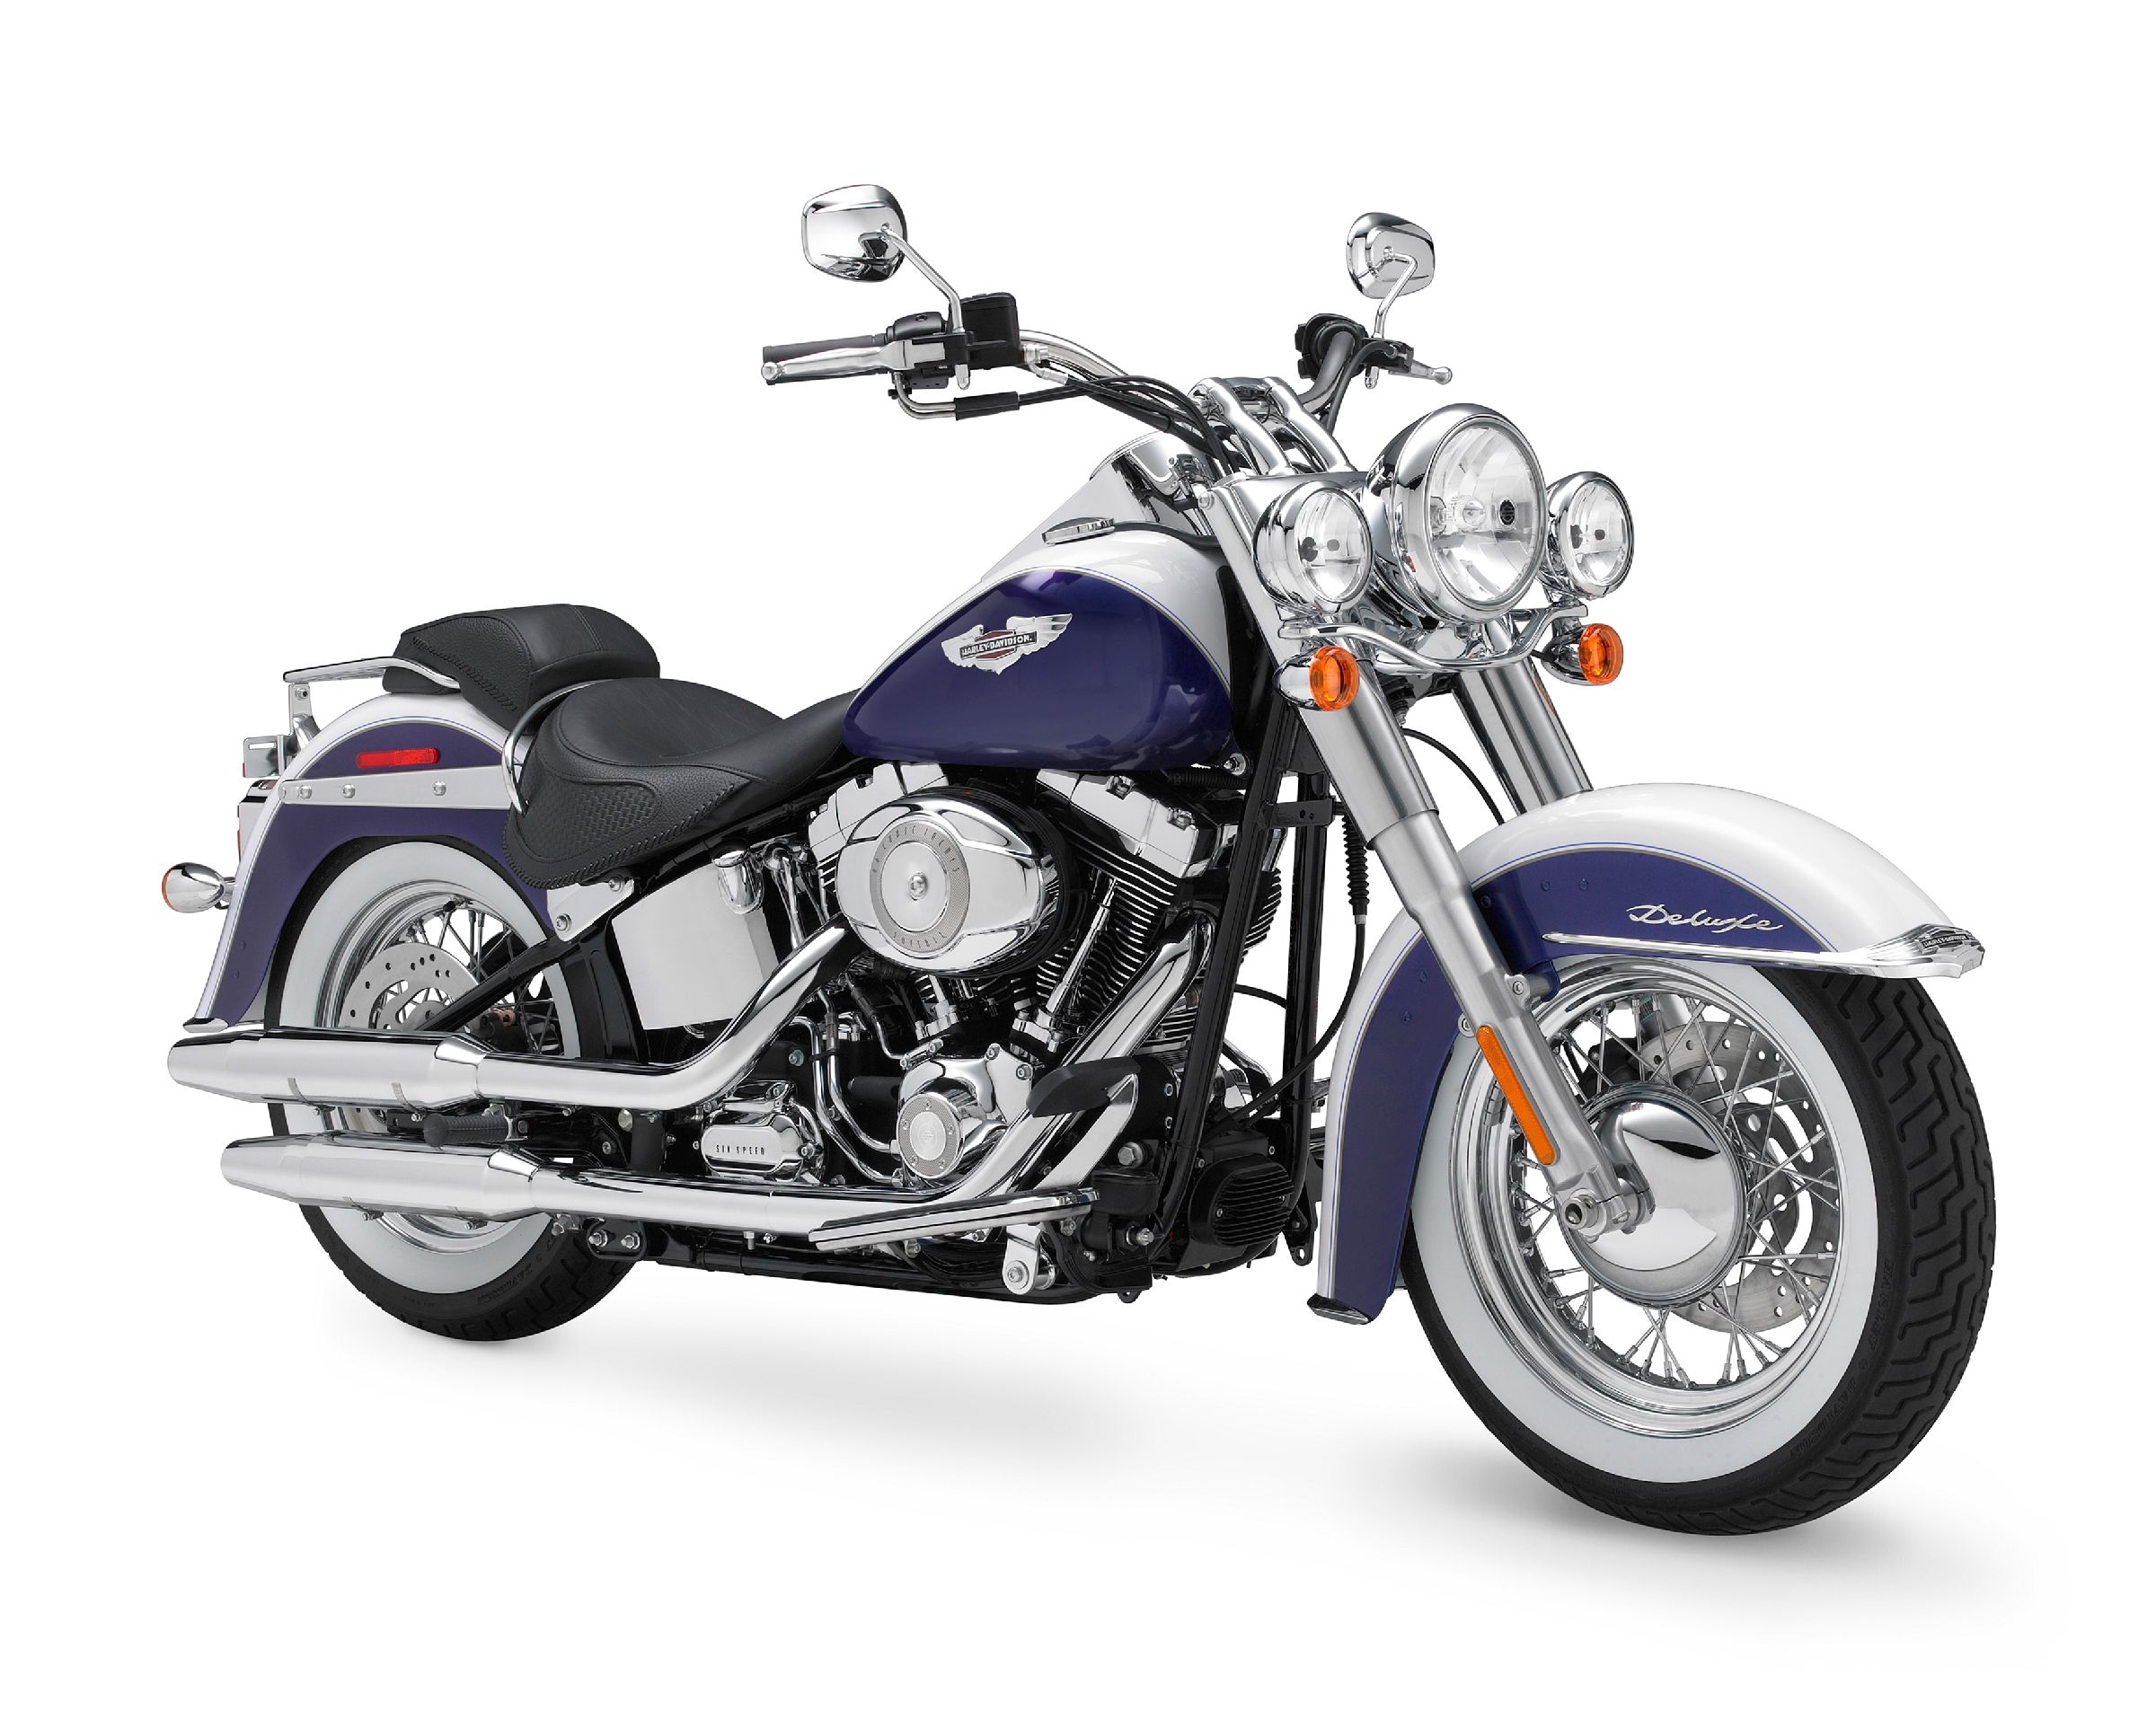  2010 Harley-Davidson Softail Deluxe